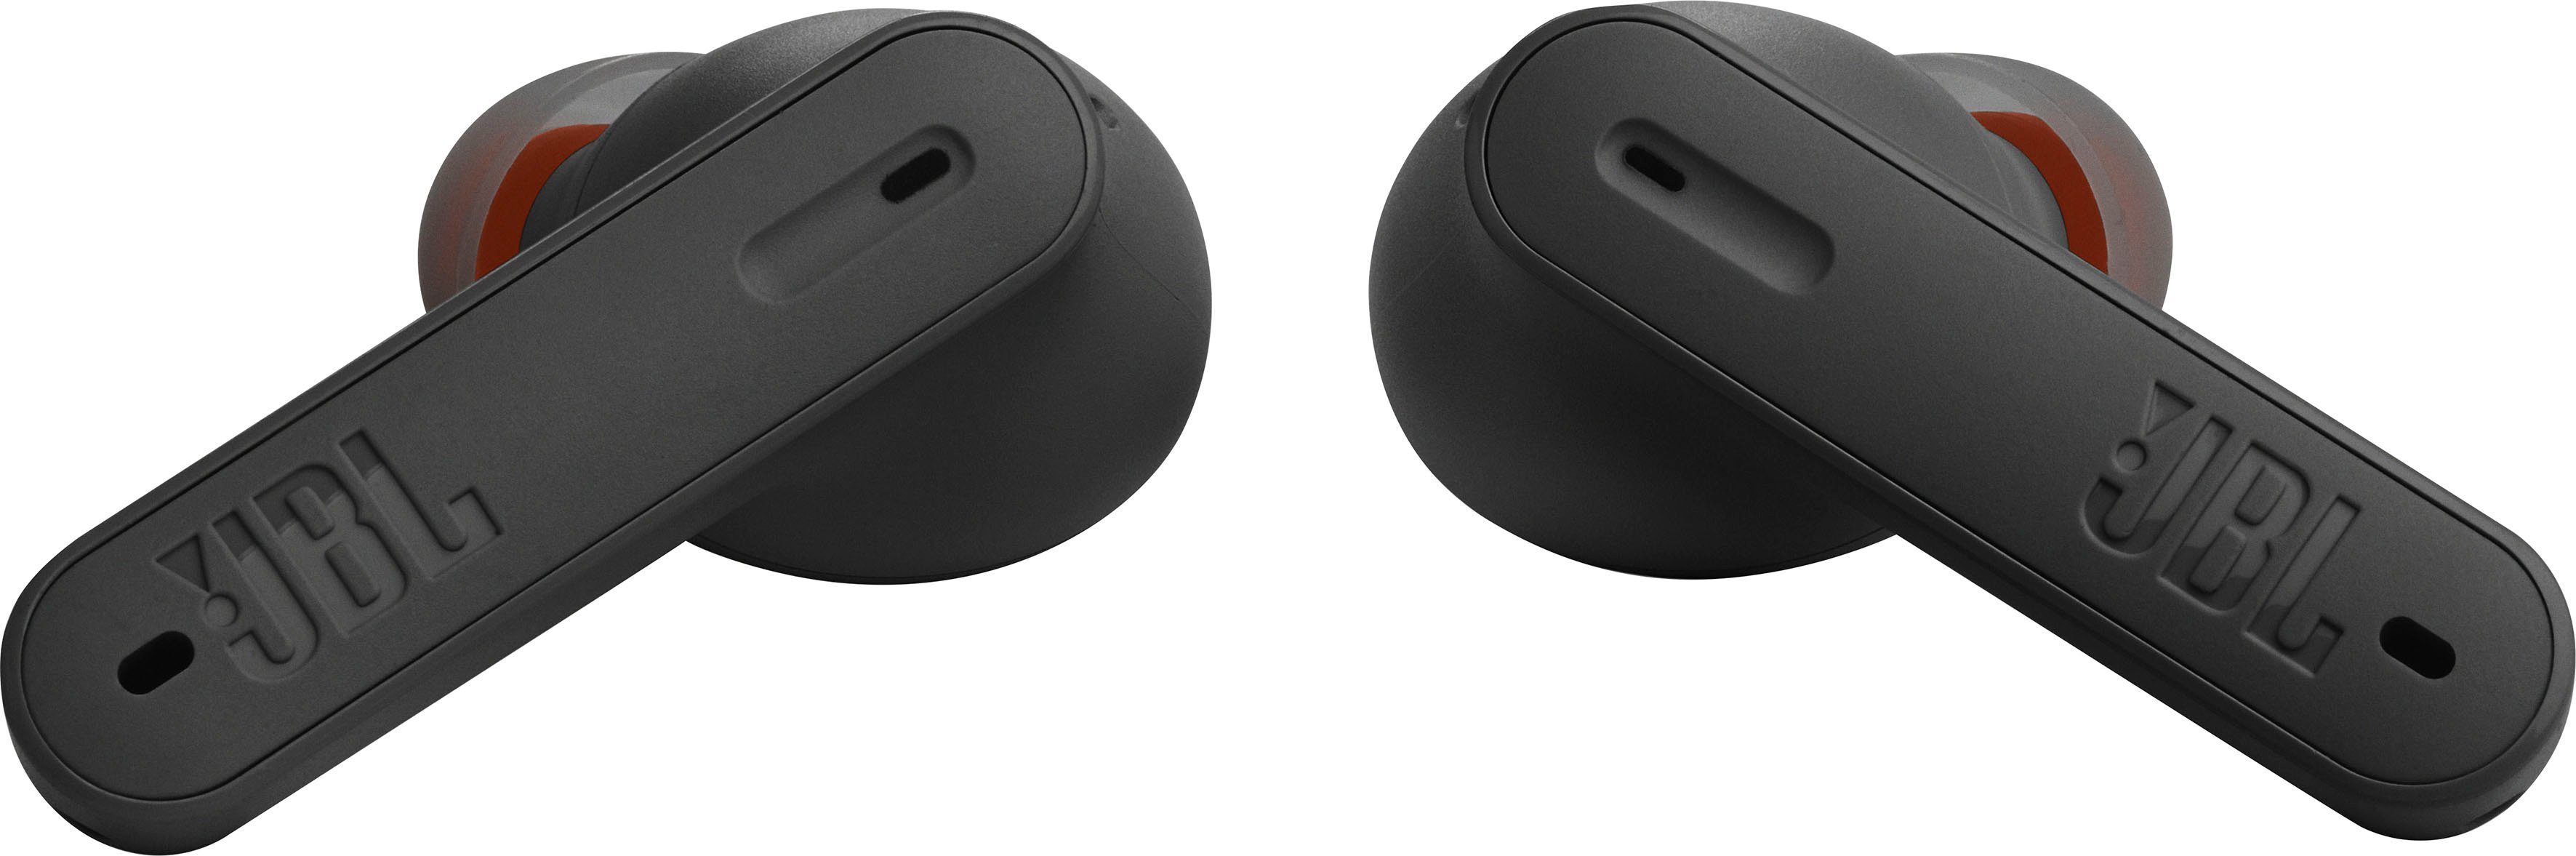 schwarz Wireless, Noise Cancelling Tune In-Ear-Kopfhörer (ANC), TWS 230NC True (Active JBL Bluetooth)